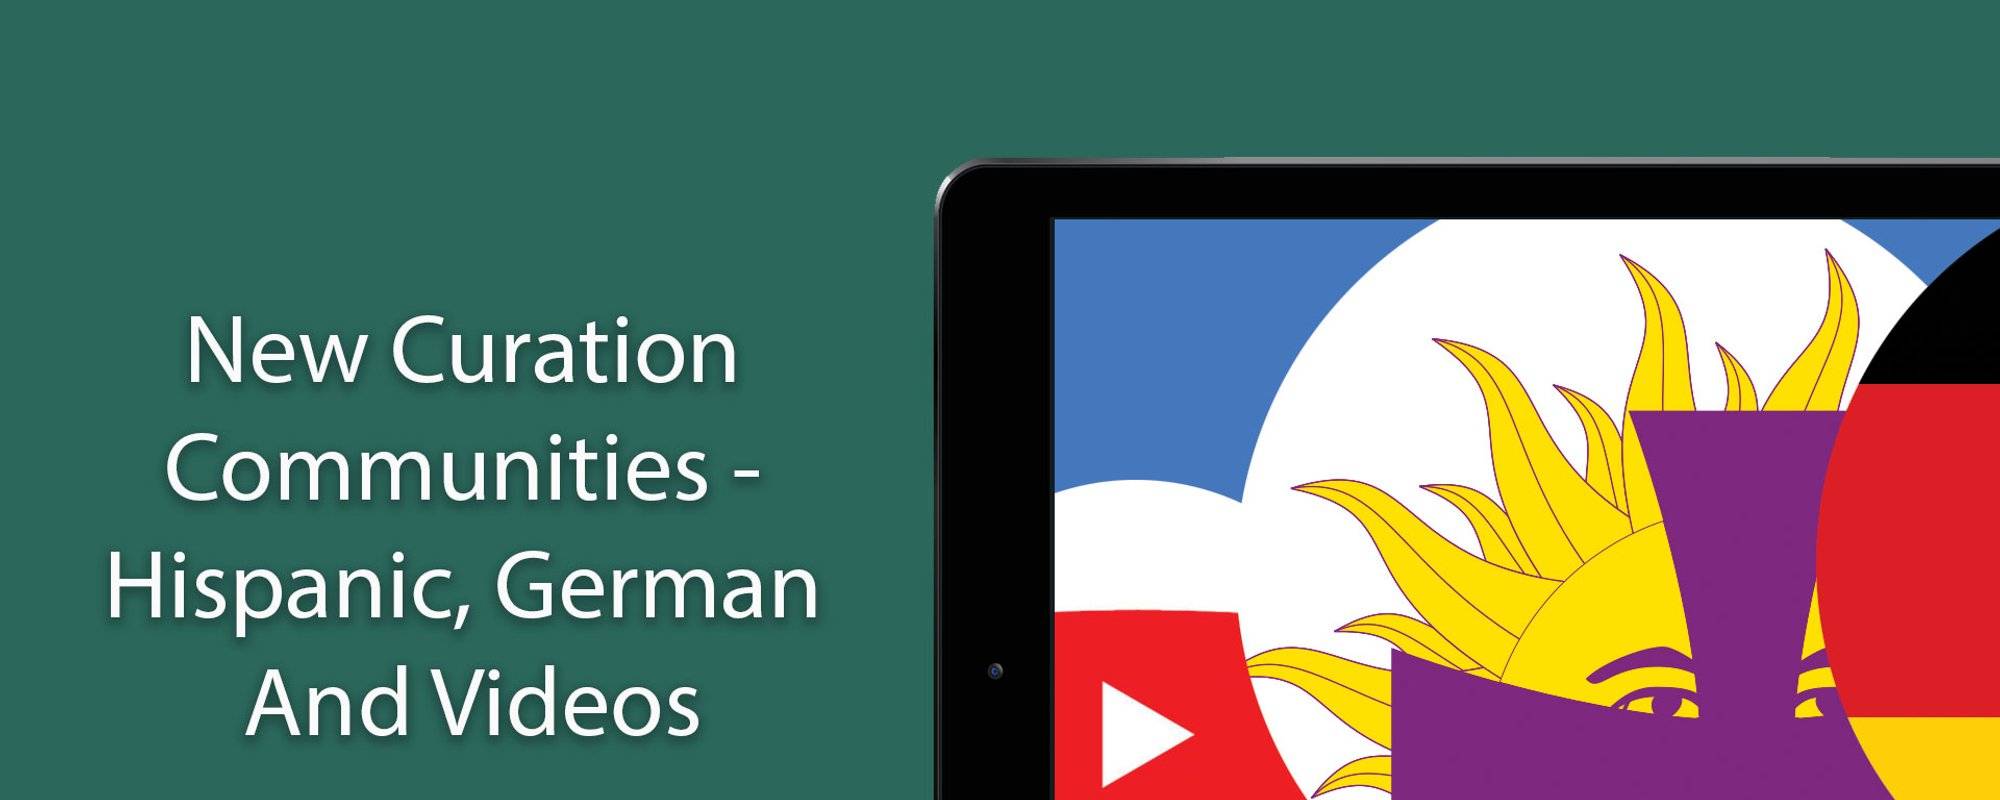 New Curation Communities - Hispanic, German And Videos